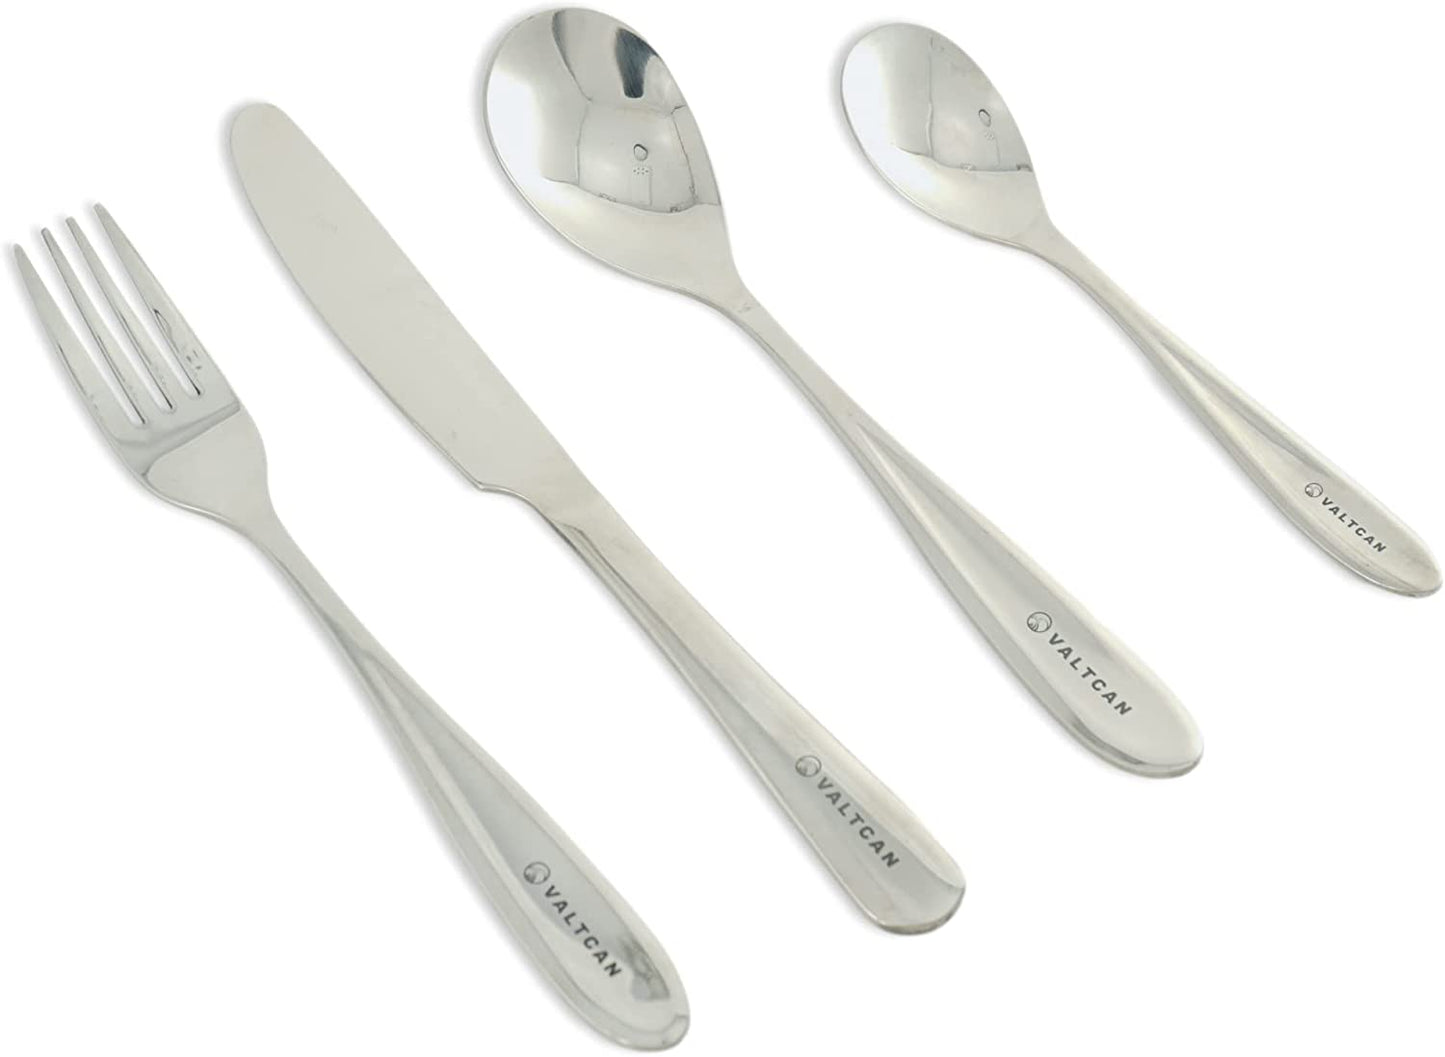 Valtcan Titanium Fork Spoon Knife Teaspoon Kitchen Flatware Long Dinner Size Travel Utensils Set 105g